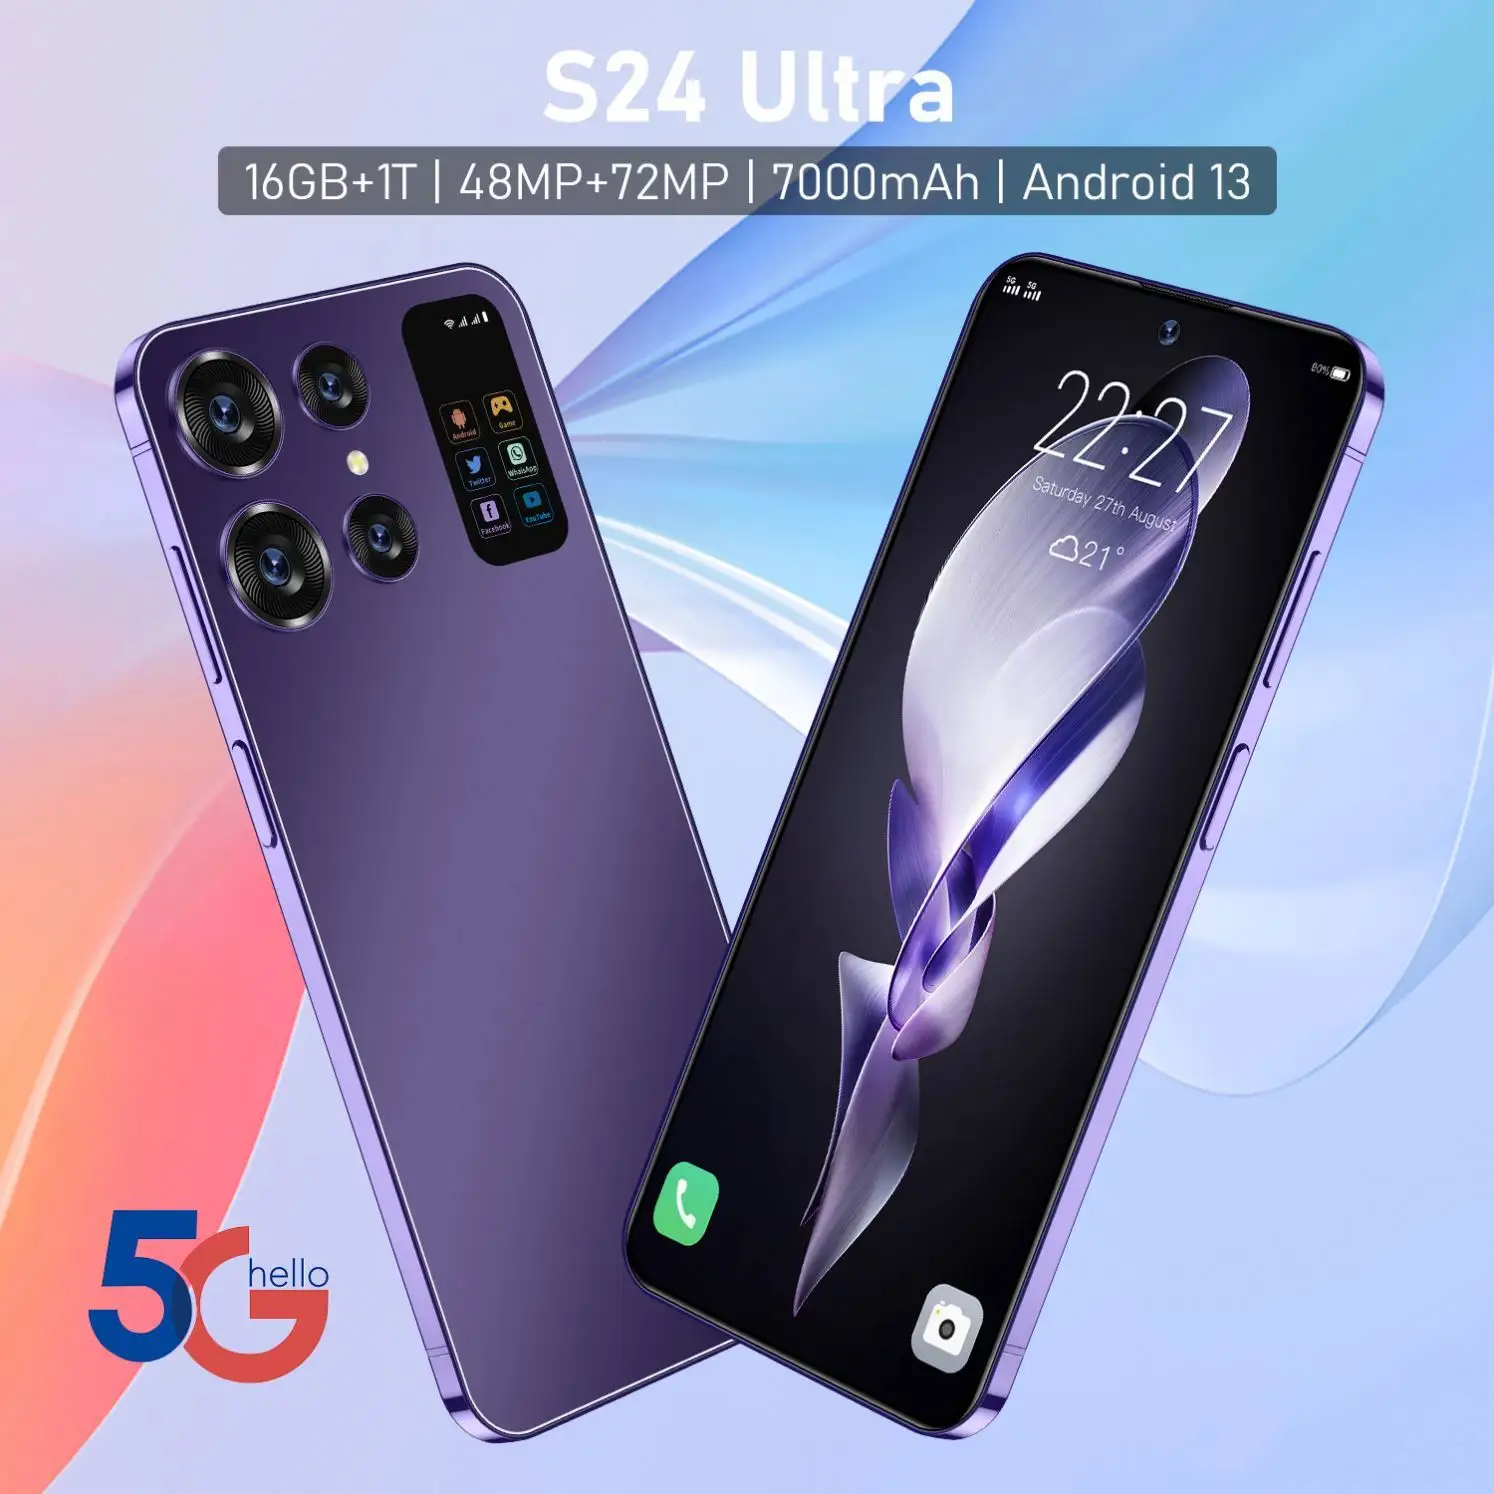 Sıcak satış S24 ULTRA orijinal 6.7 inç 16GB + 1TB 72MP + 108MP büyük ekran cep telefonu Smartphone 5G cep cep telefonu